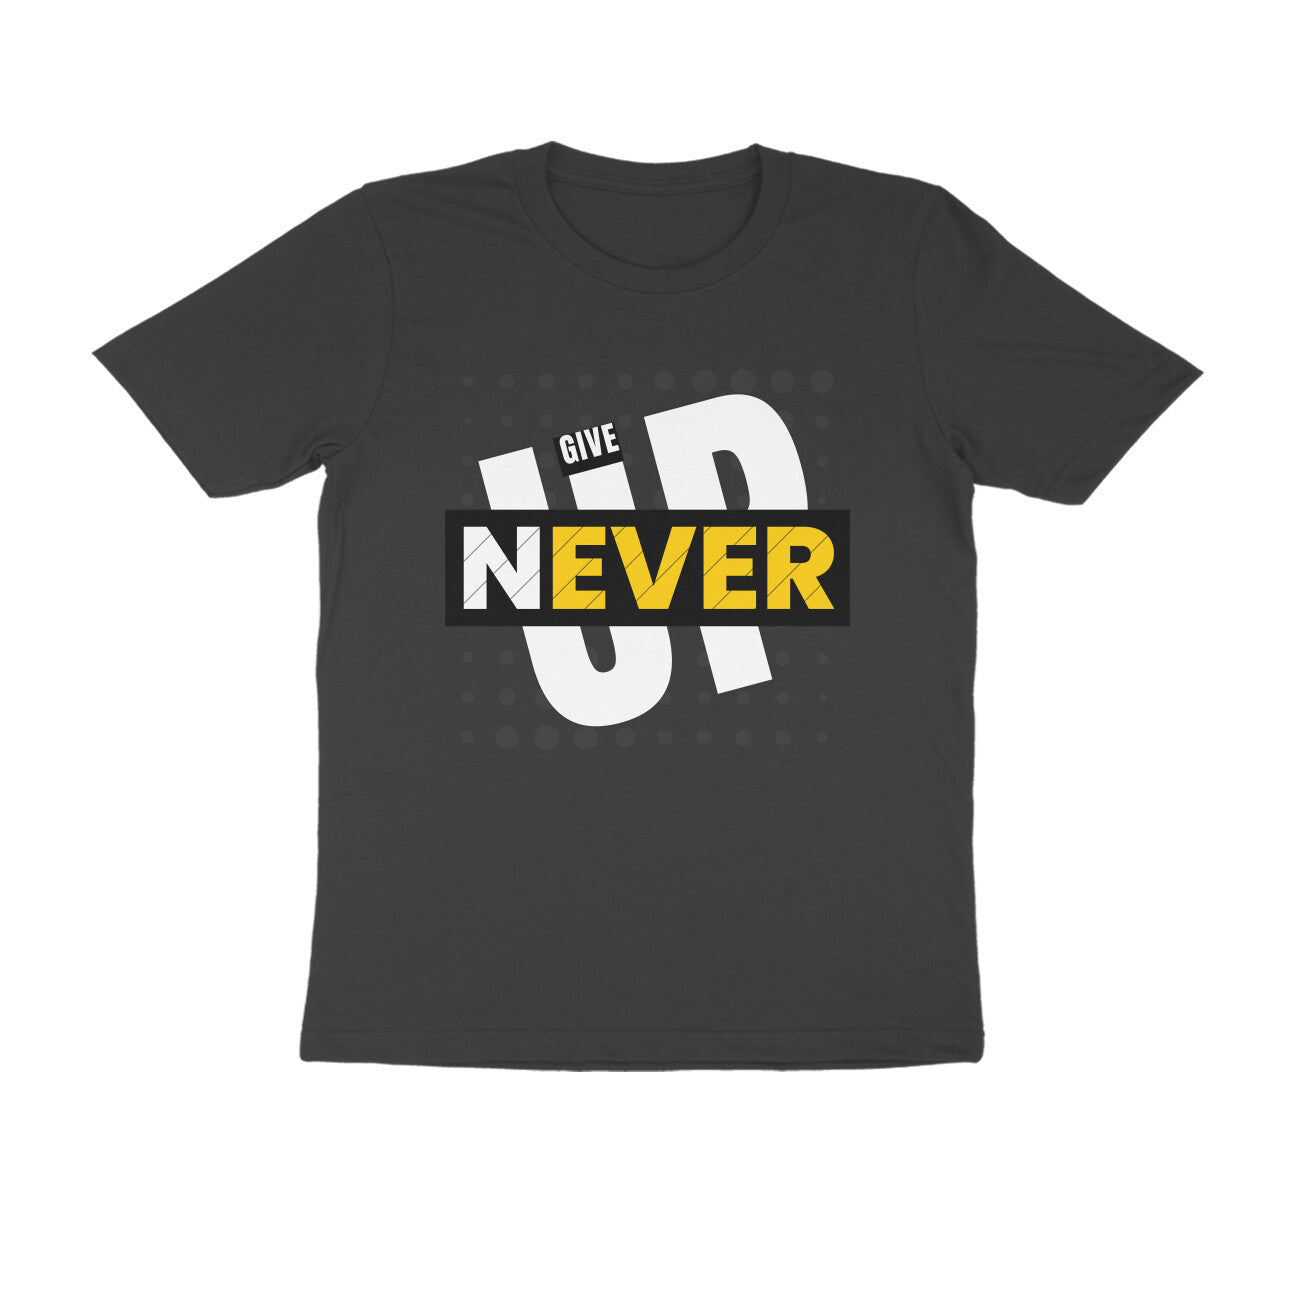 Never Give Up - Men's Black T-shirt